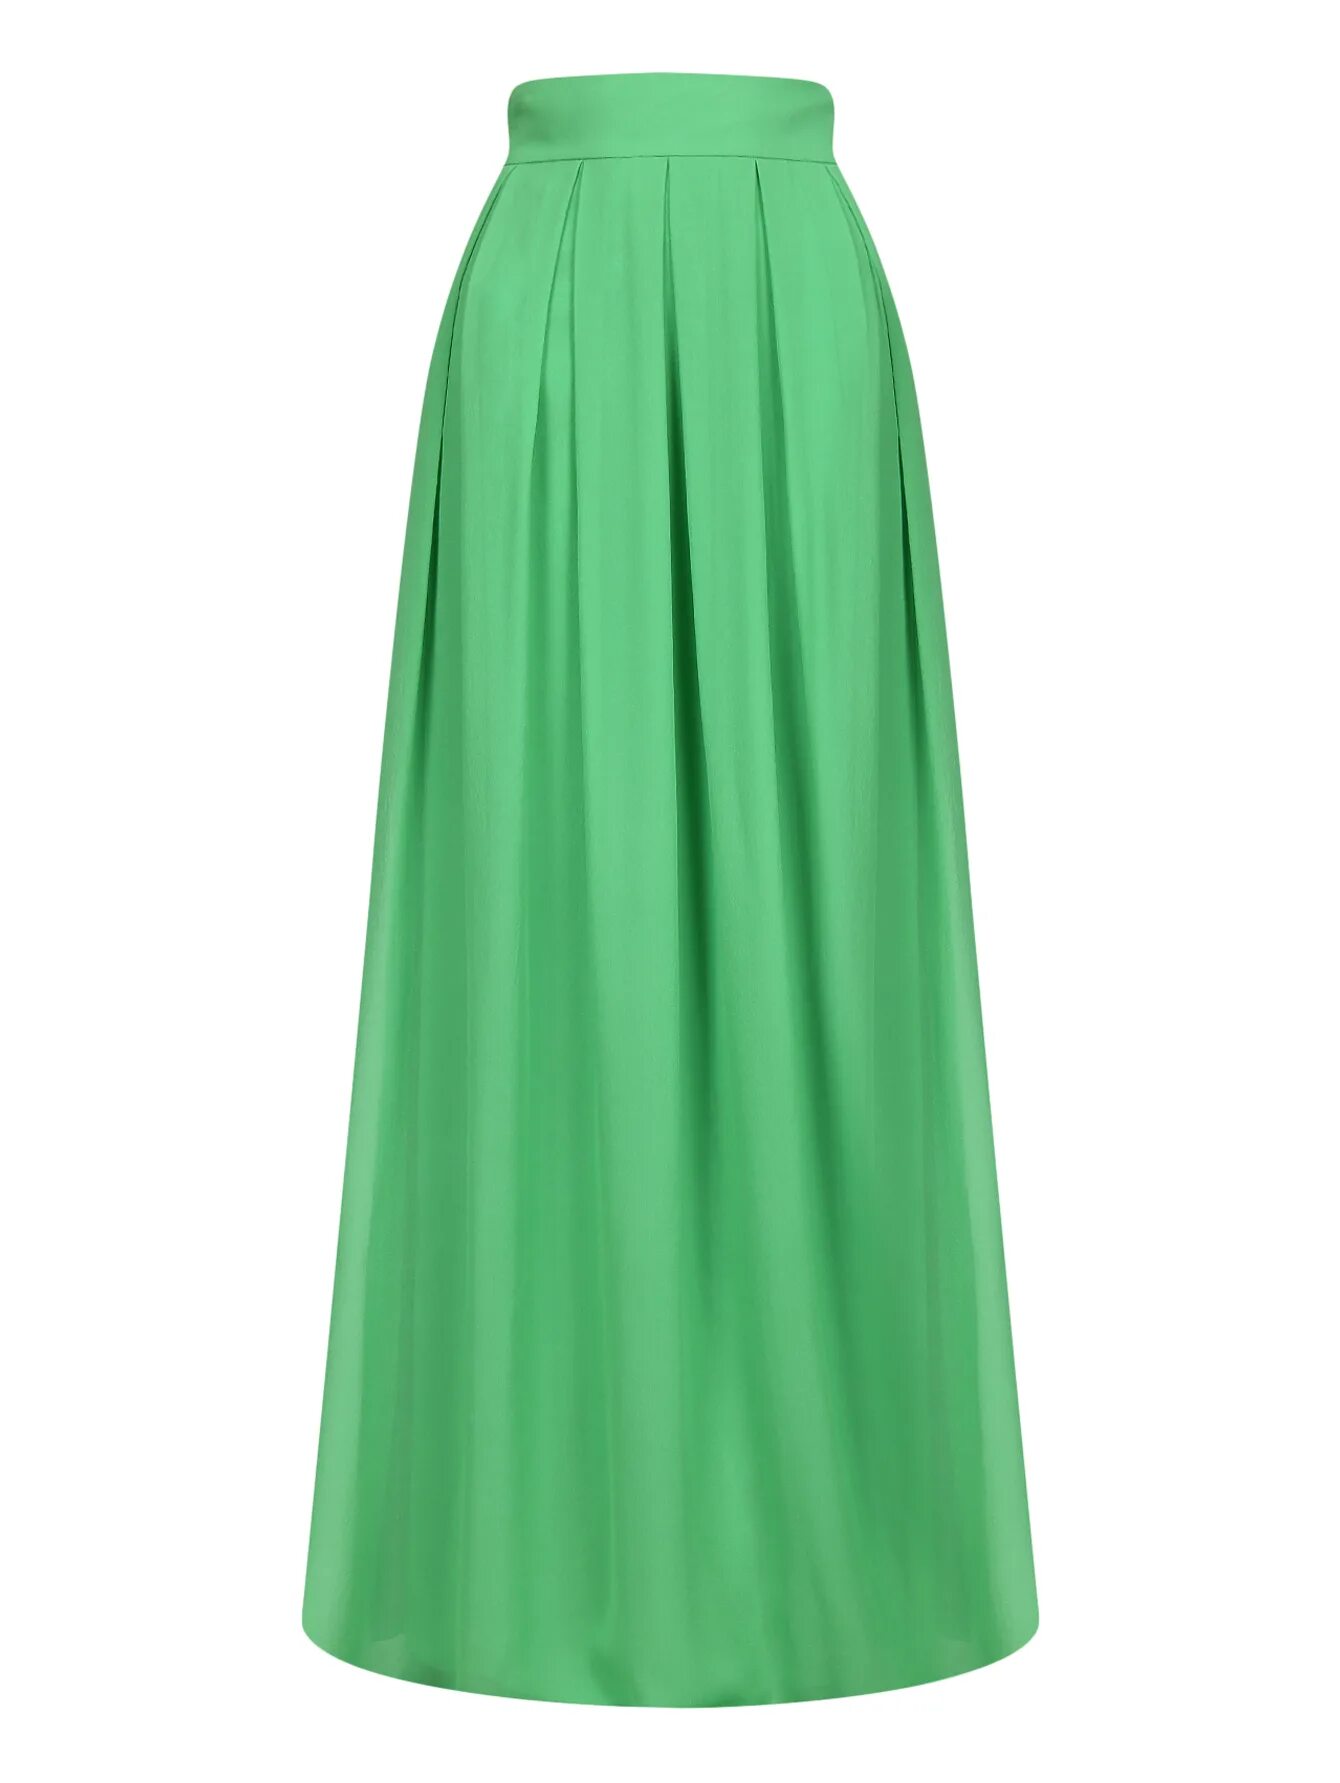 Rv117z юбка макси зелёная. Ermanno Scervino юбка зеленая. Юбка макси 2023. Юбки макси 2022 зеленые.